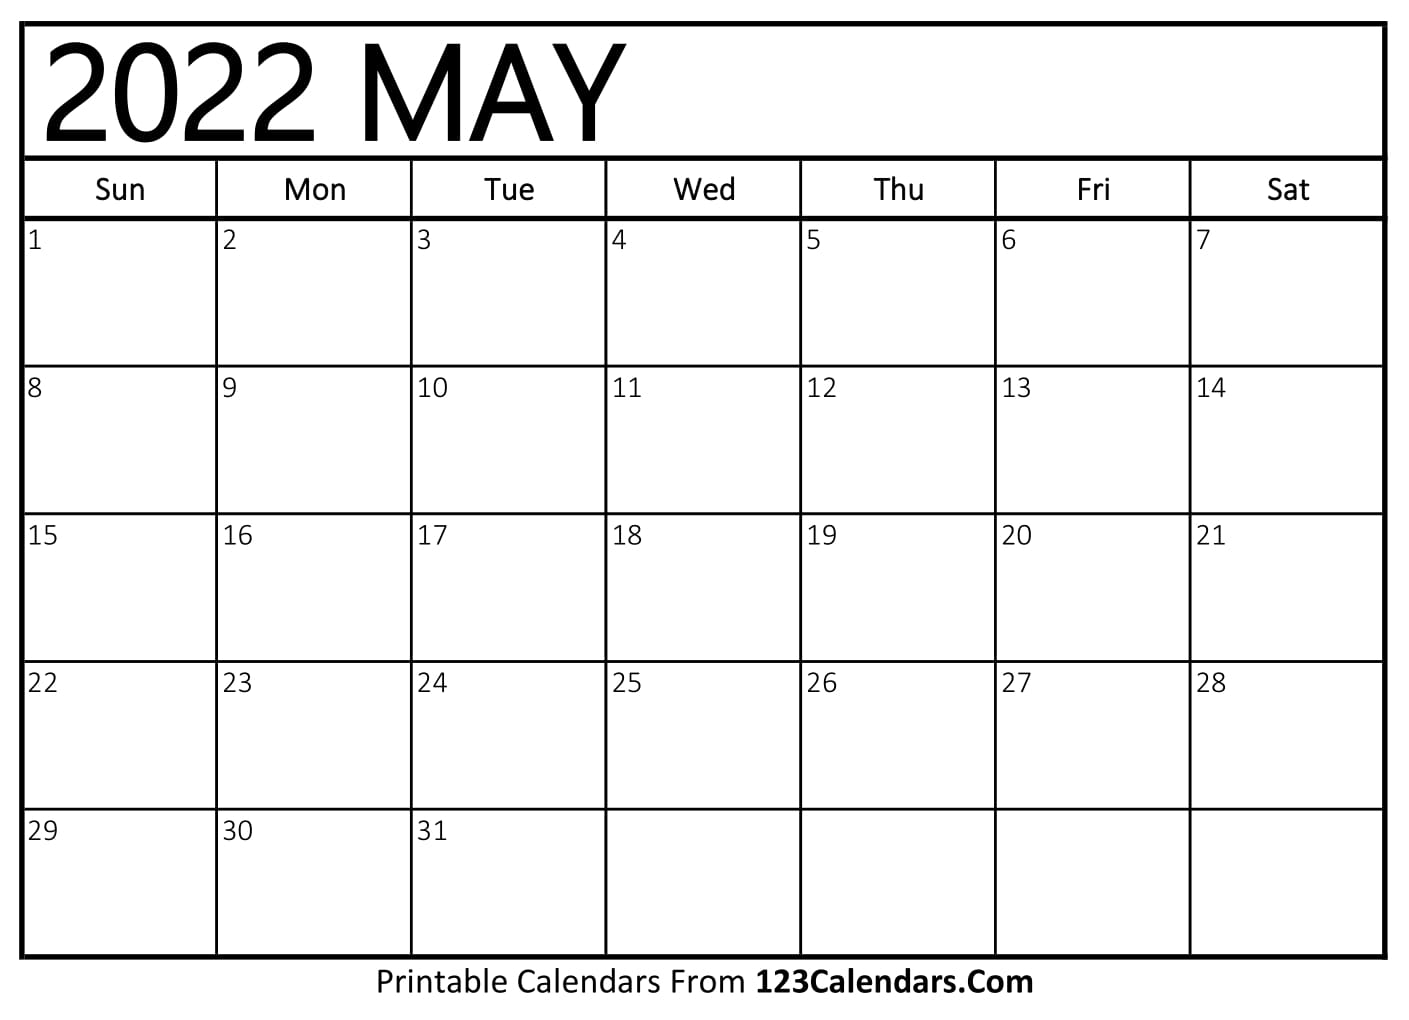 May 2022 Weekly Calendar Printable May 2022 Calendar Templates - 123Calendars.com